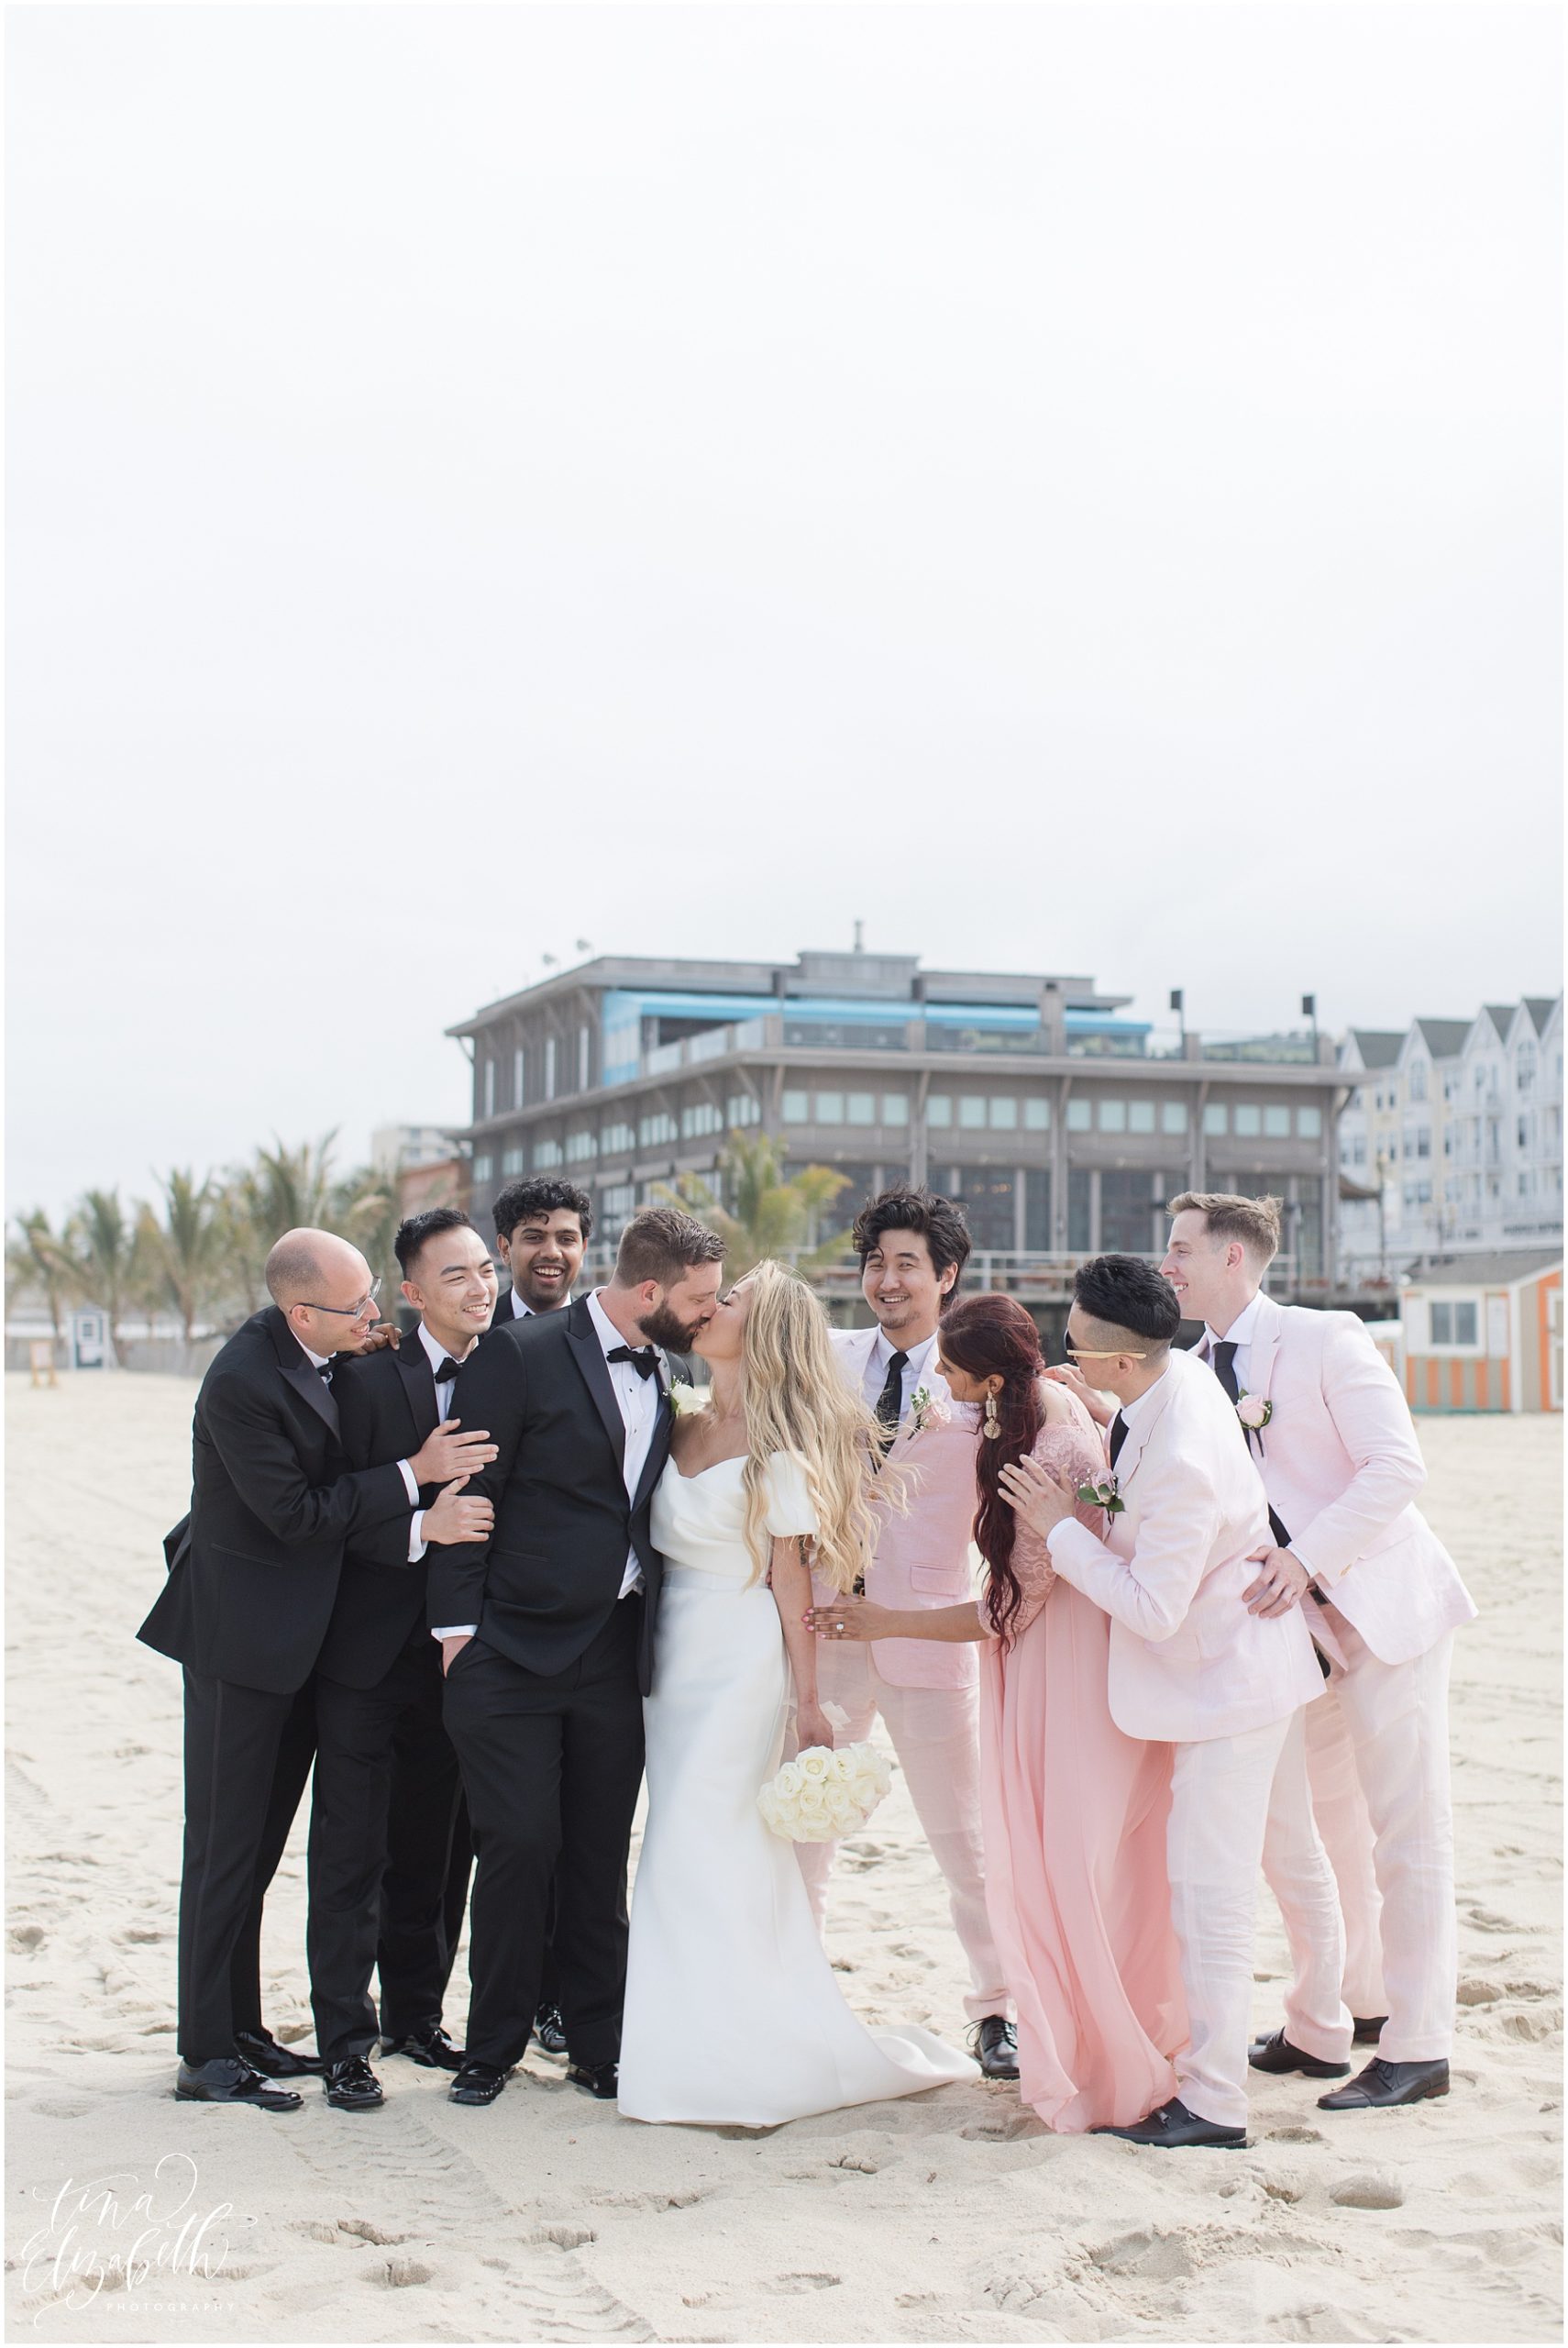 McLoone's Pierhouse Wedding Photos - Tina Elizabeth Photography